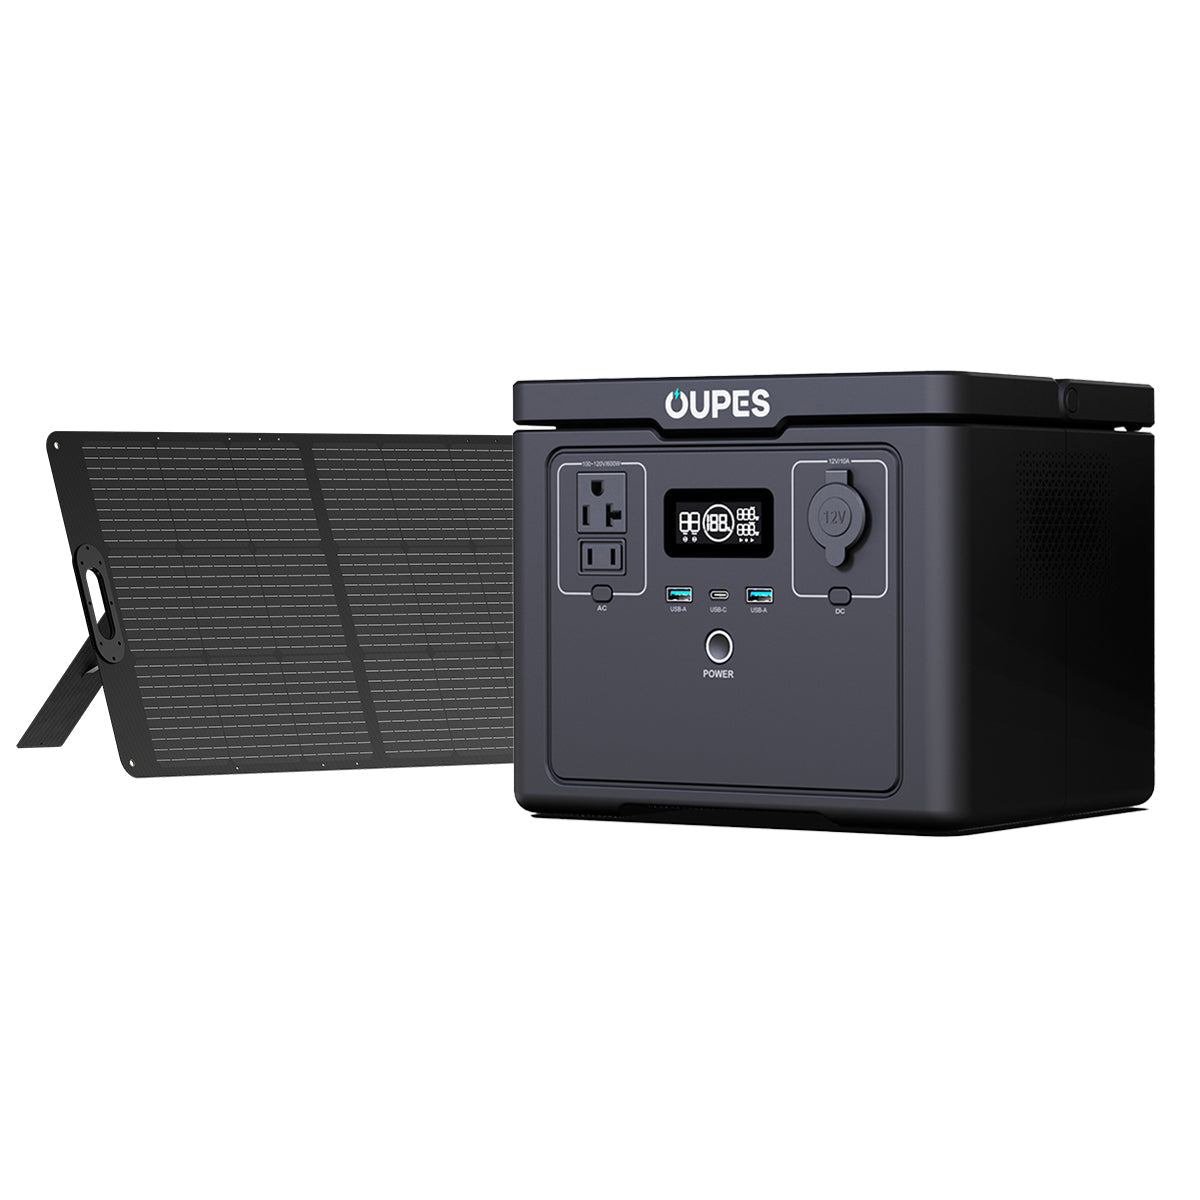 Exodus 600 Plus + 240W Solar Panel | Solar Generator Kit